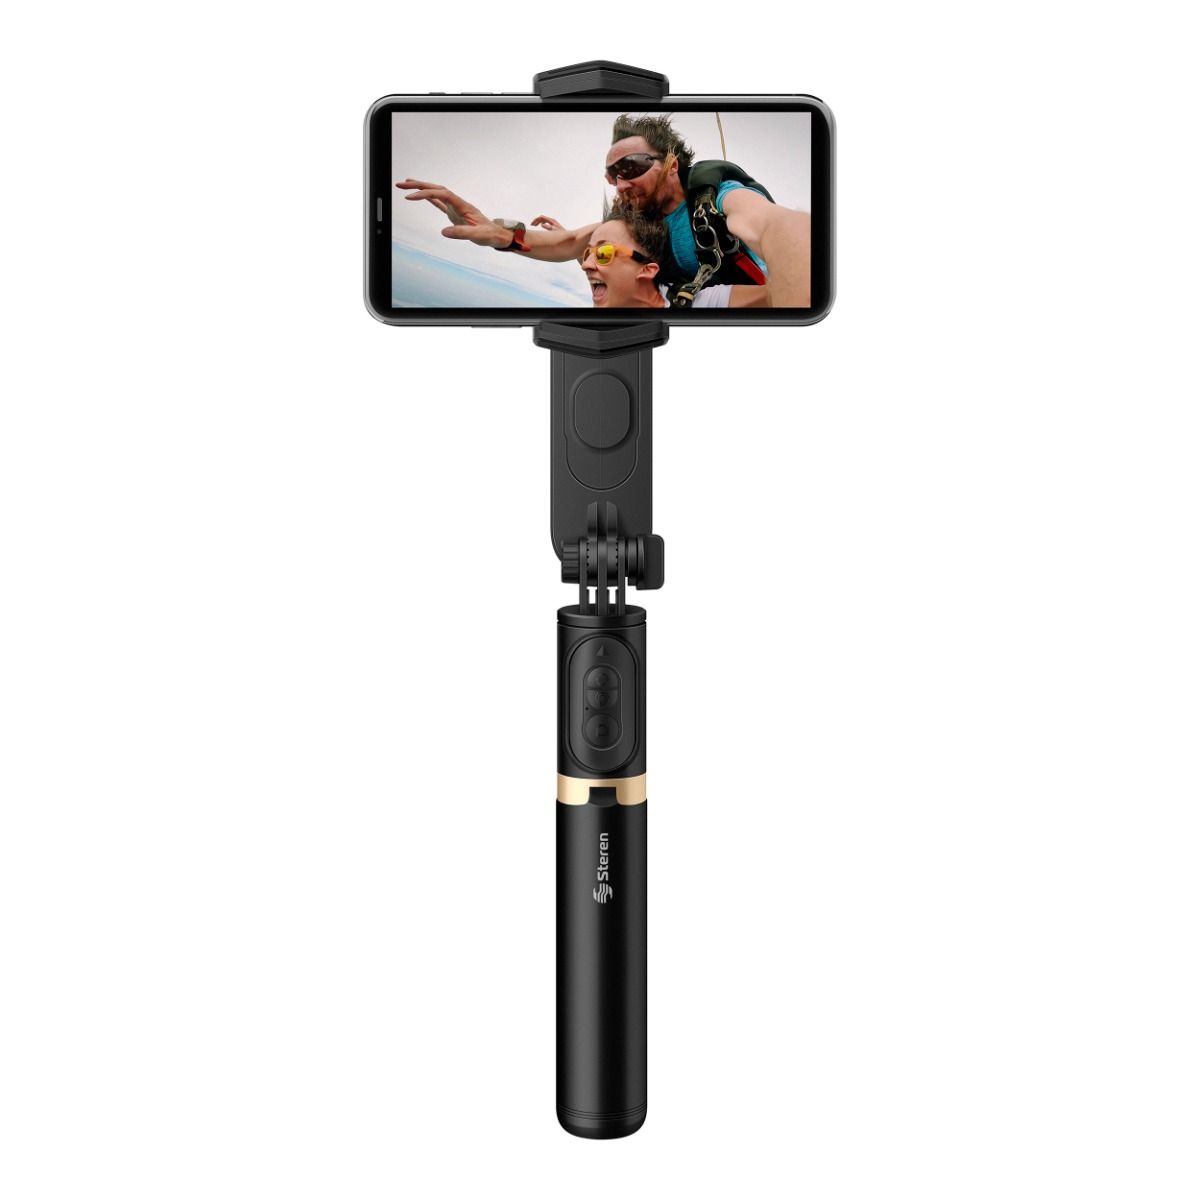 Las mejores ofertas en Palos de Selfie Teléfono Celular Brazo Telescópico